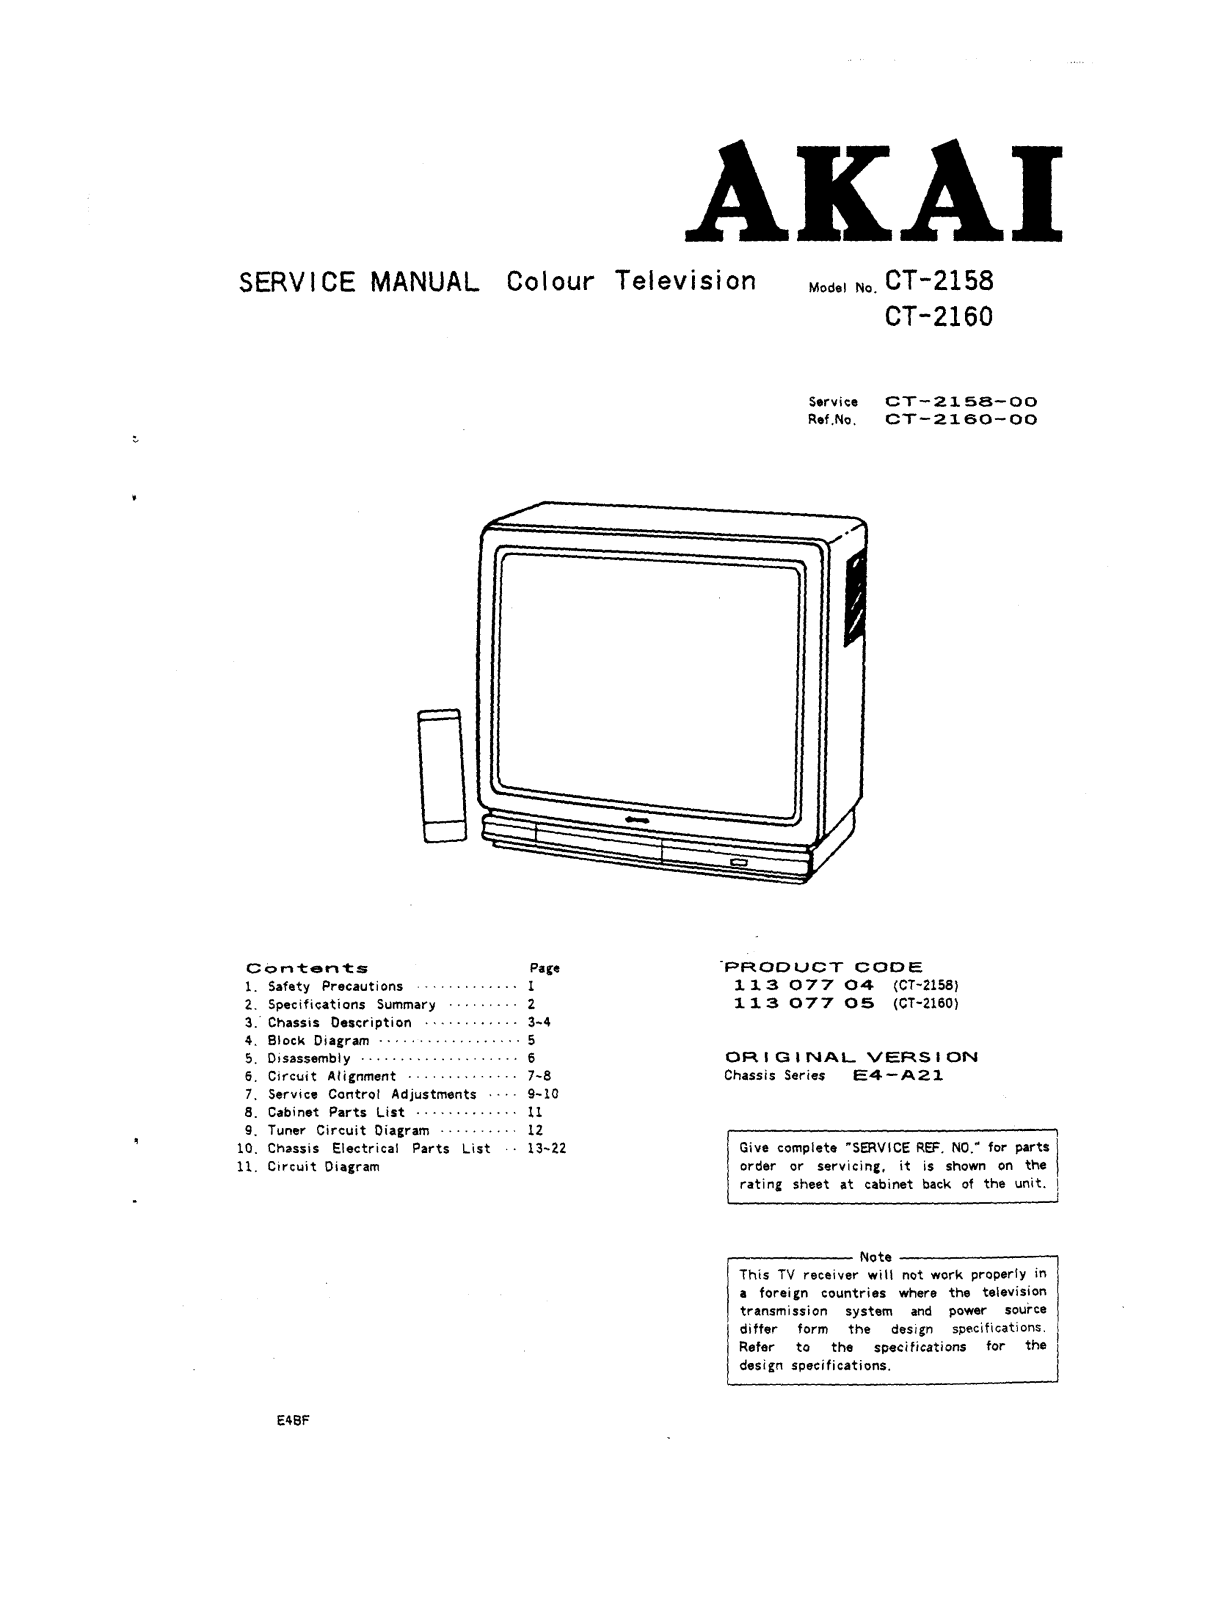 Akai E4-A21, CT-2160, CT-2158 Service Manual